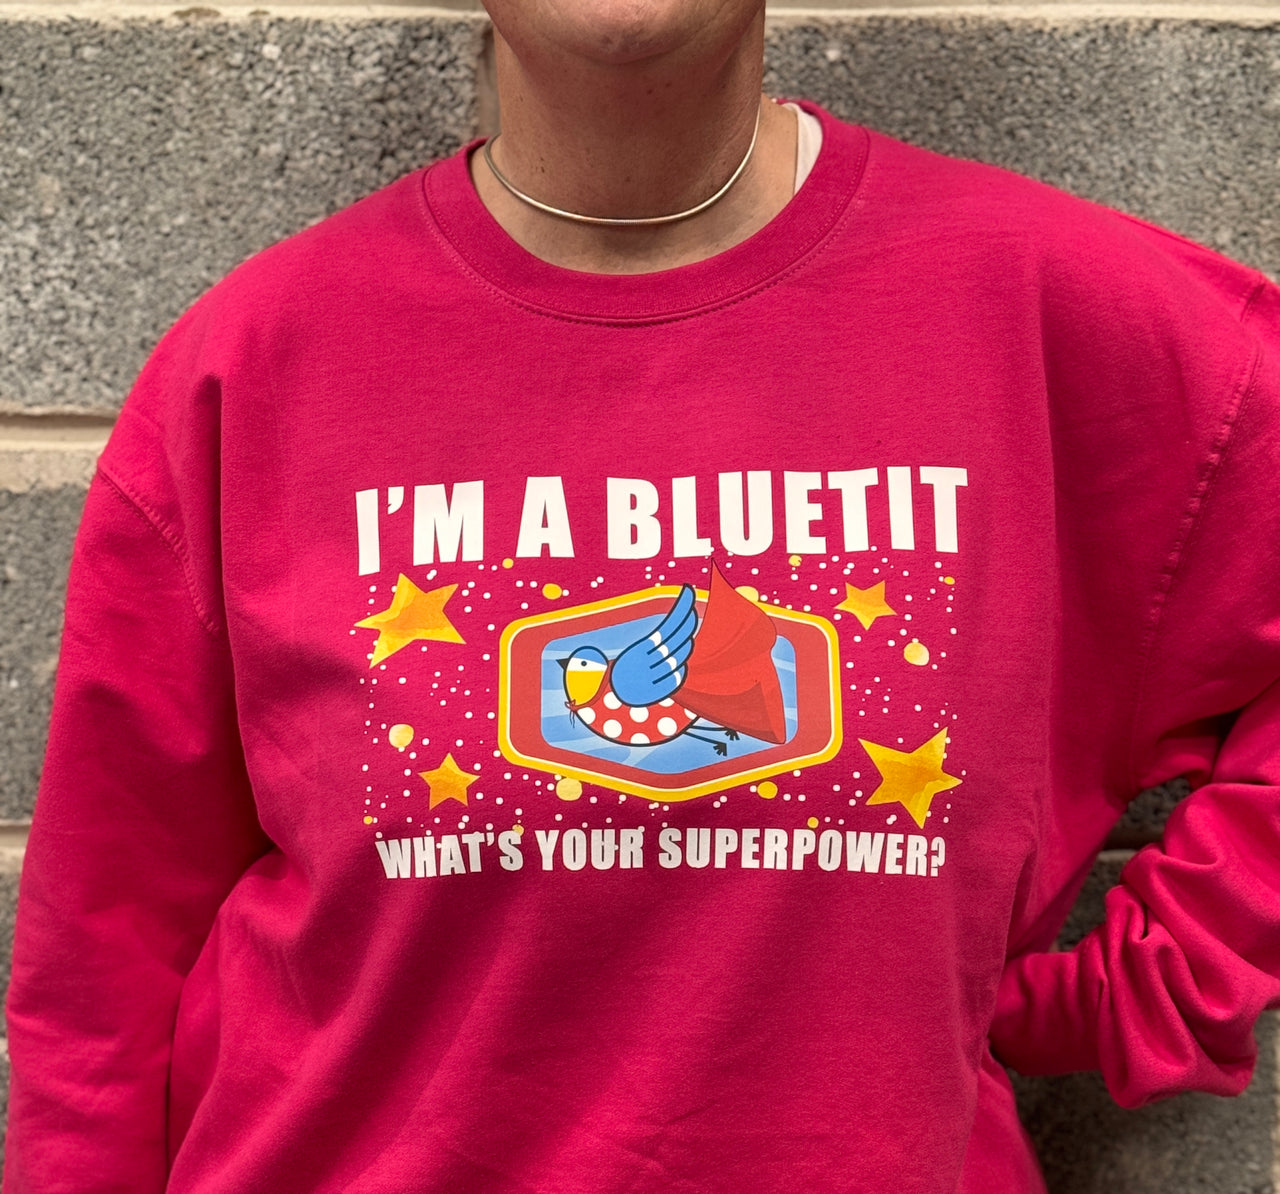 Bluetit Sweatshirt - I'm a Bluetit What's Your Superpower? (Limited Edition)